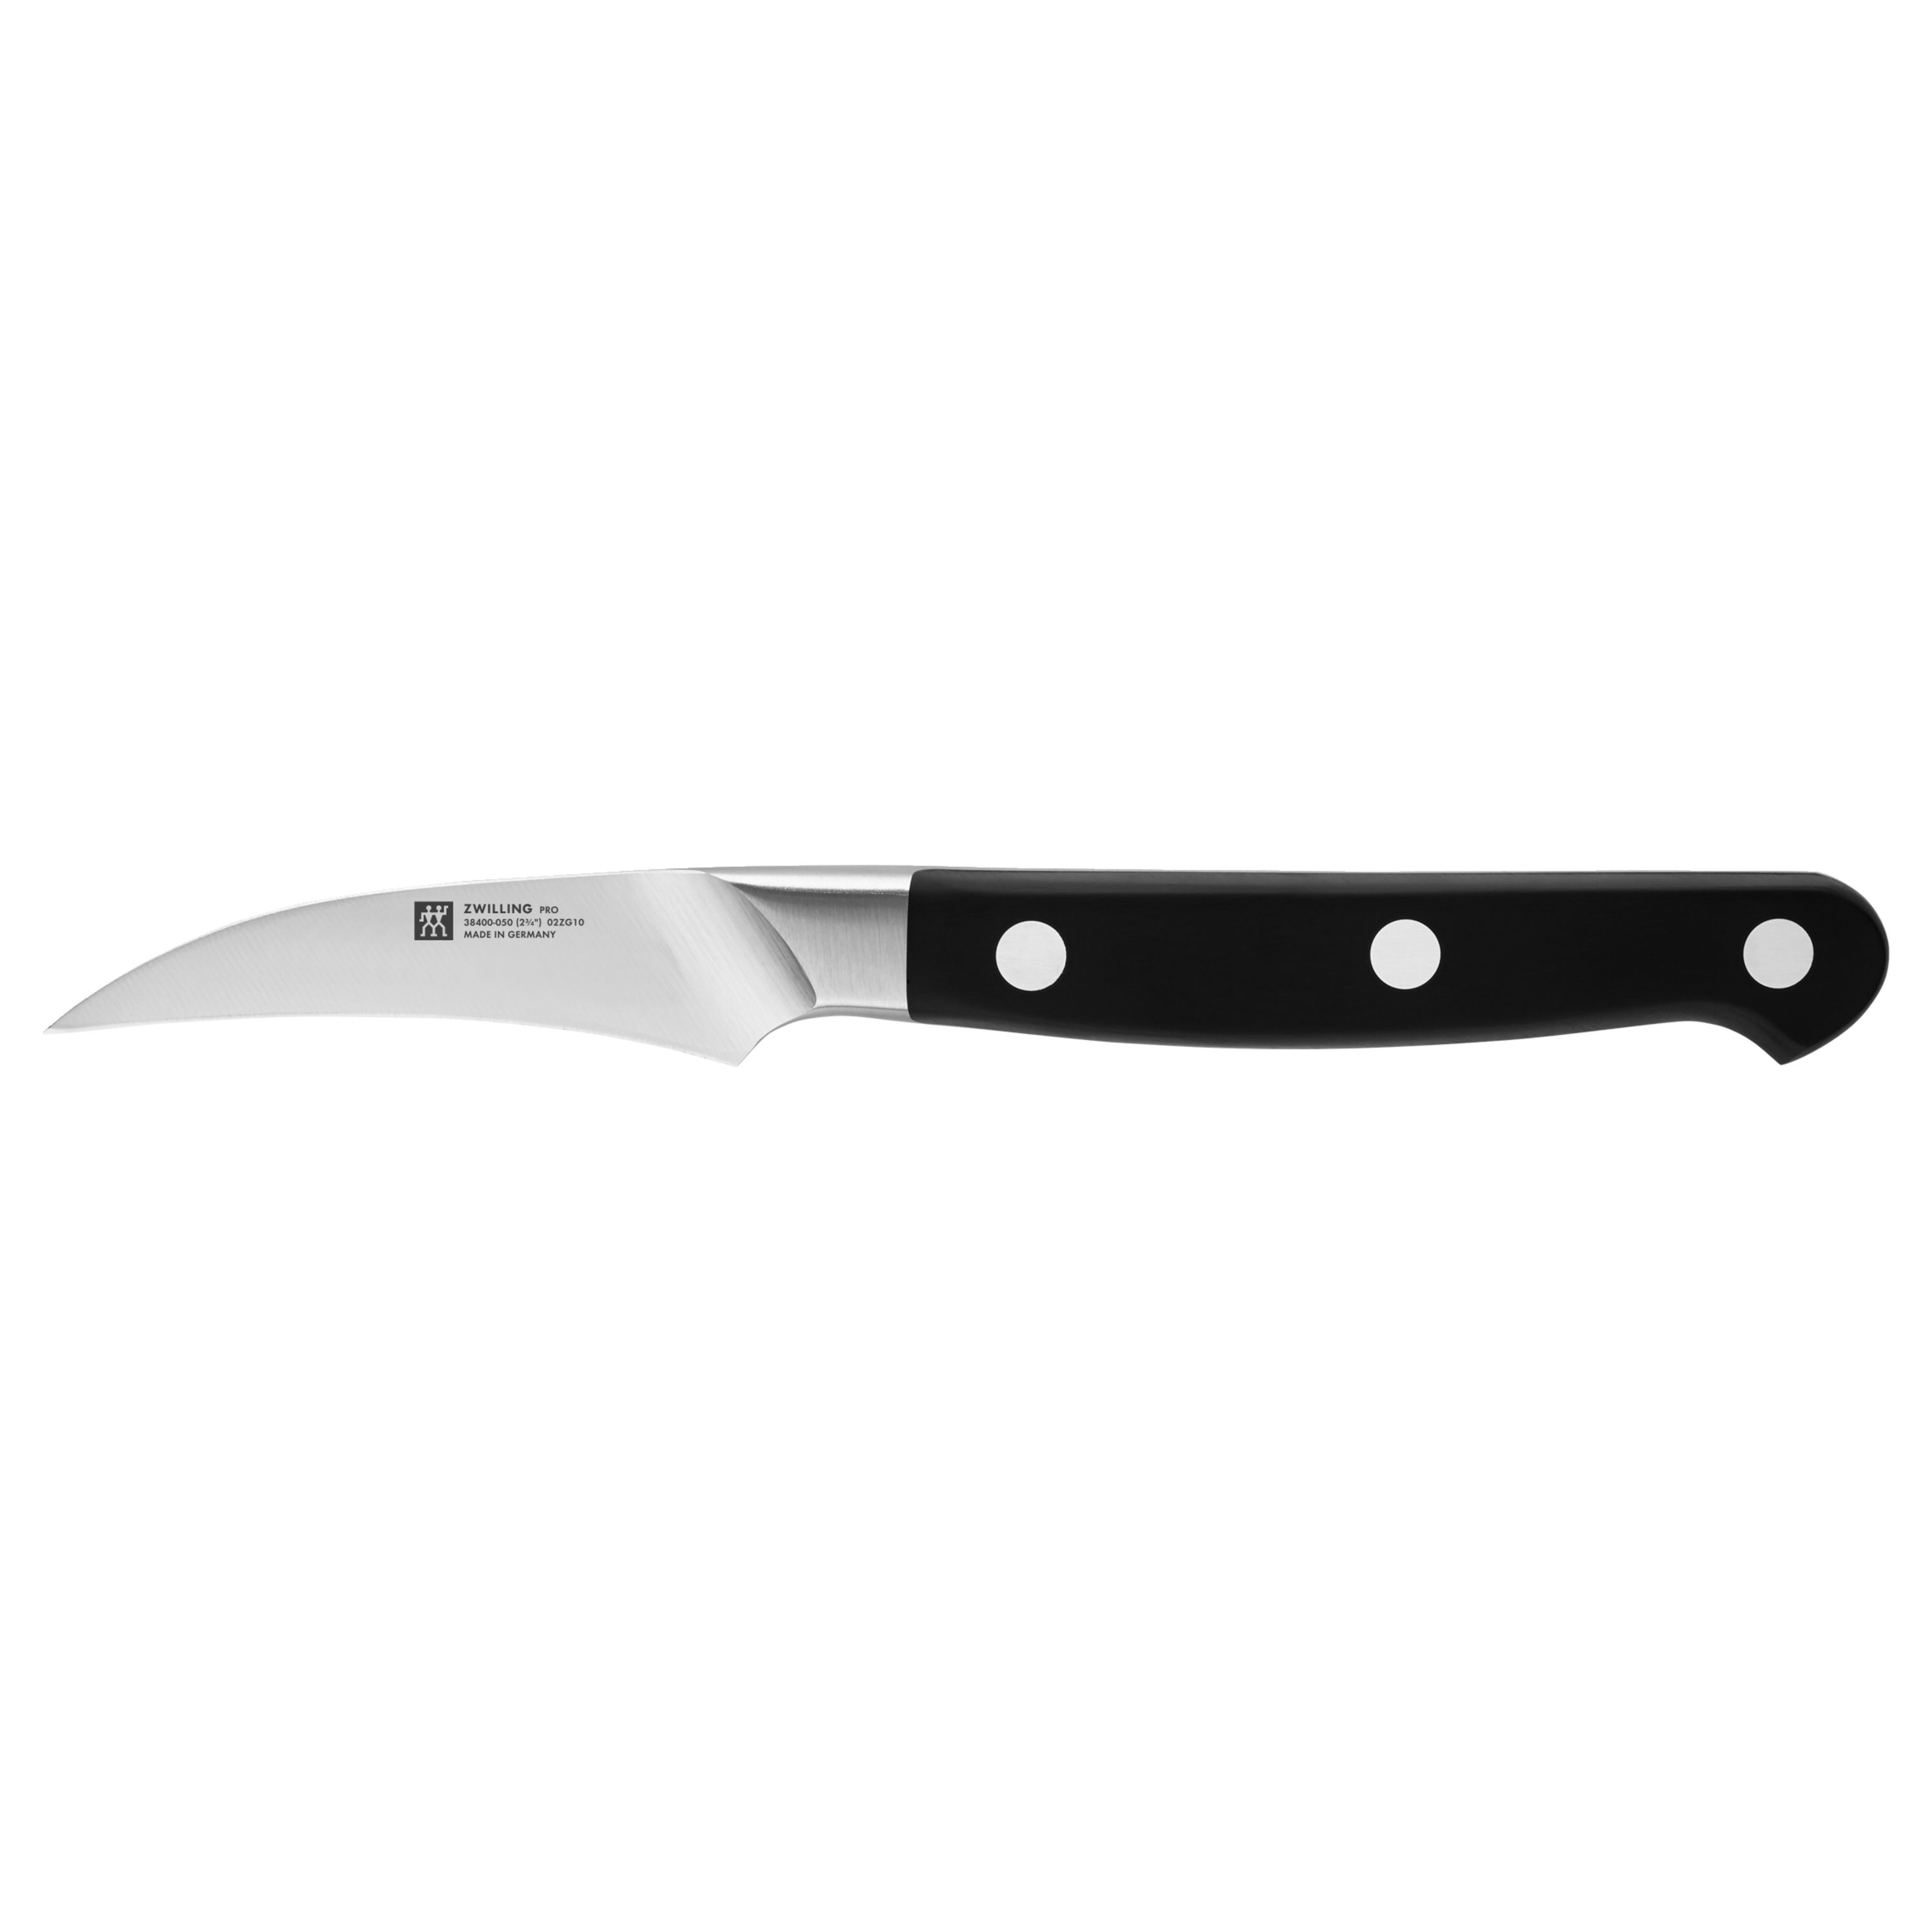 Buy ZWILLING Pro Peeling knife